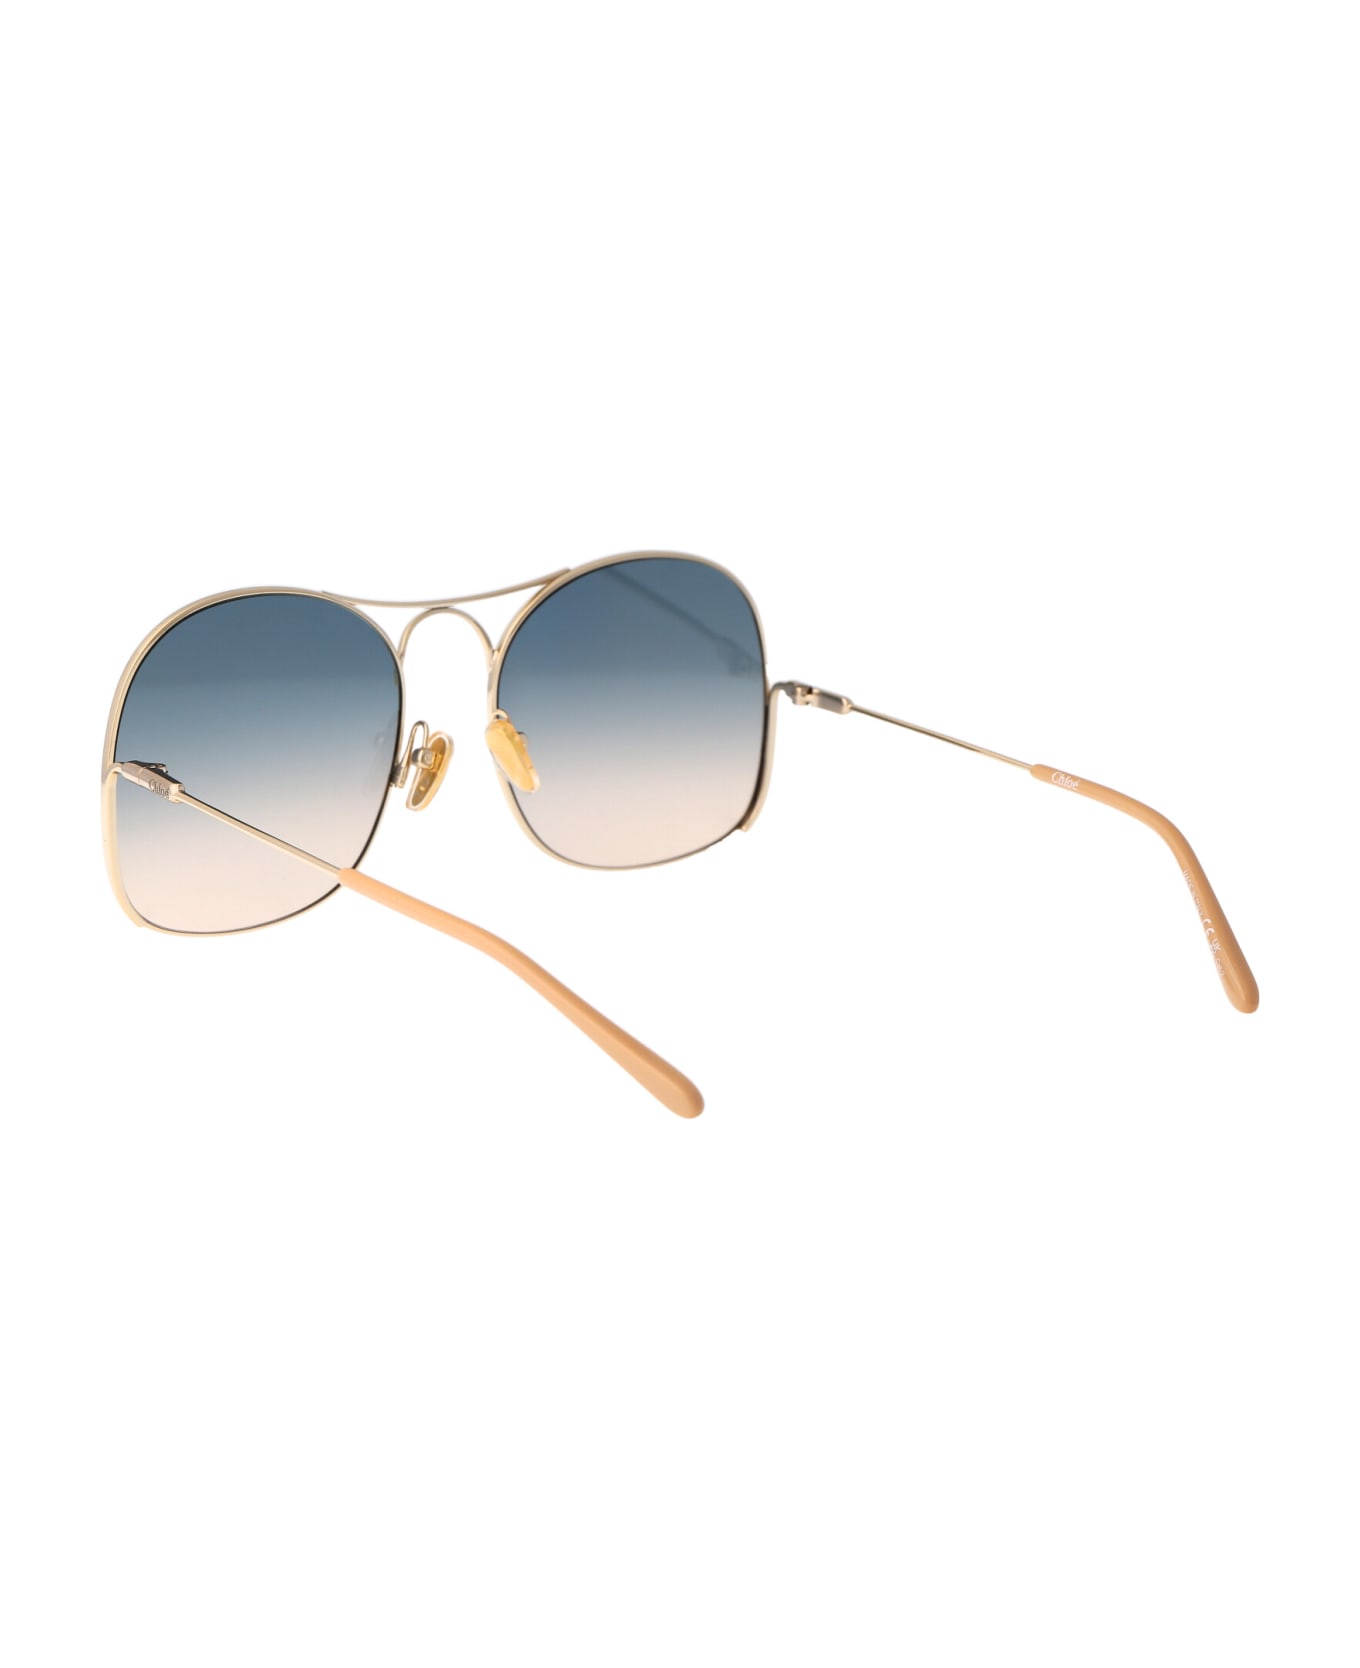 Chloé Eyewear Ch0164s Sunglasses - 002 GOLD GOLD GREEN